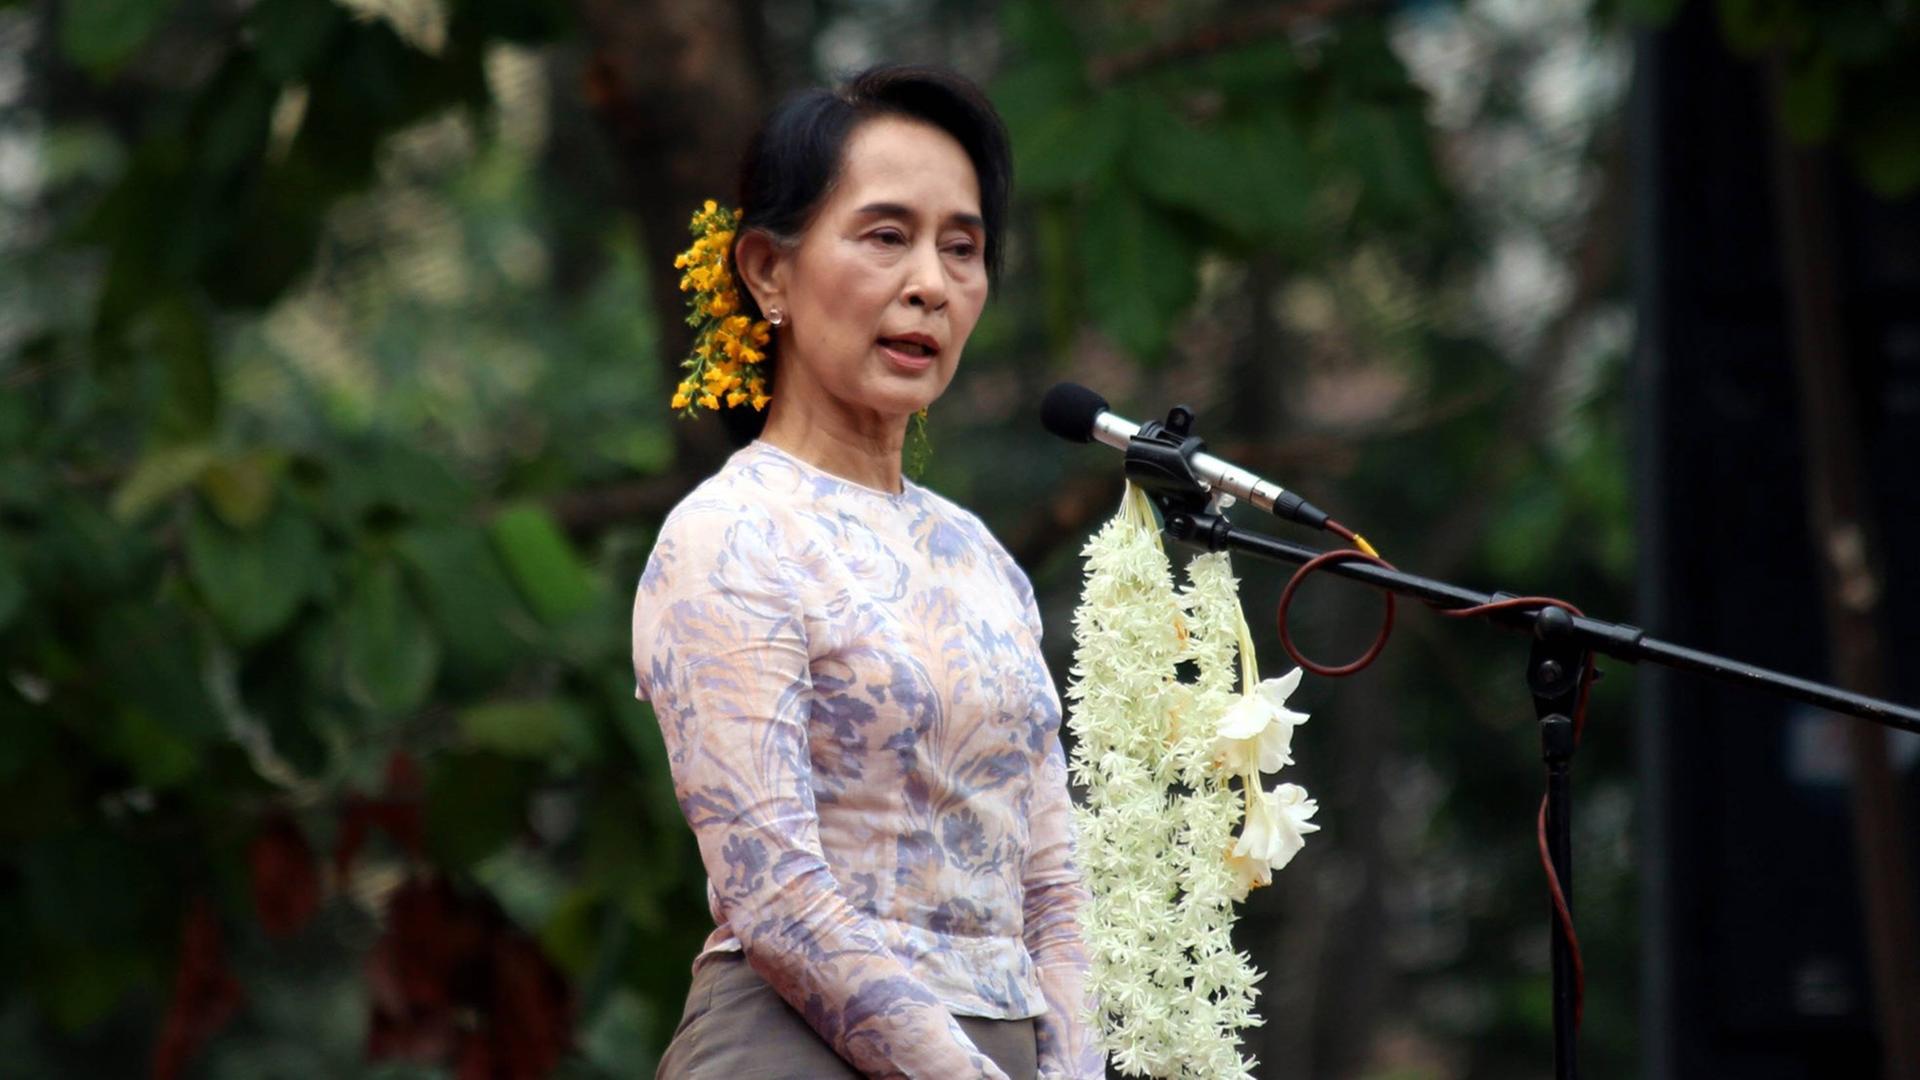 Oppositionsführerin Aung San Suu Kyi